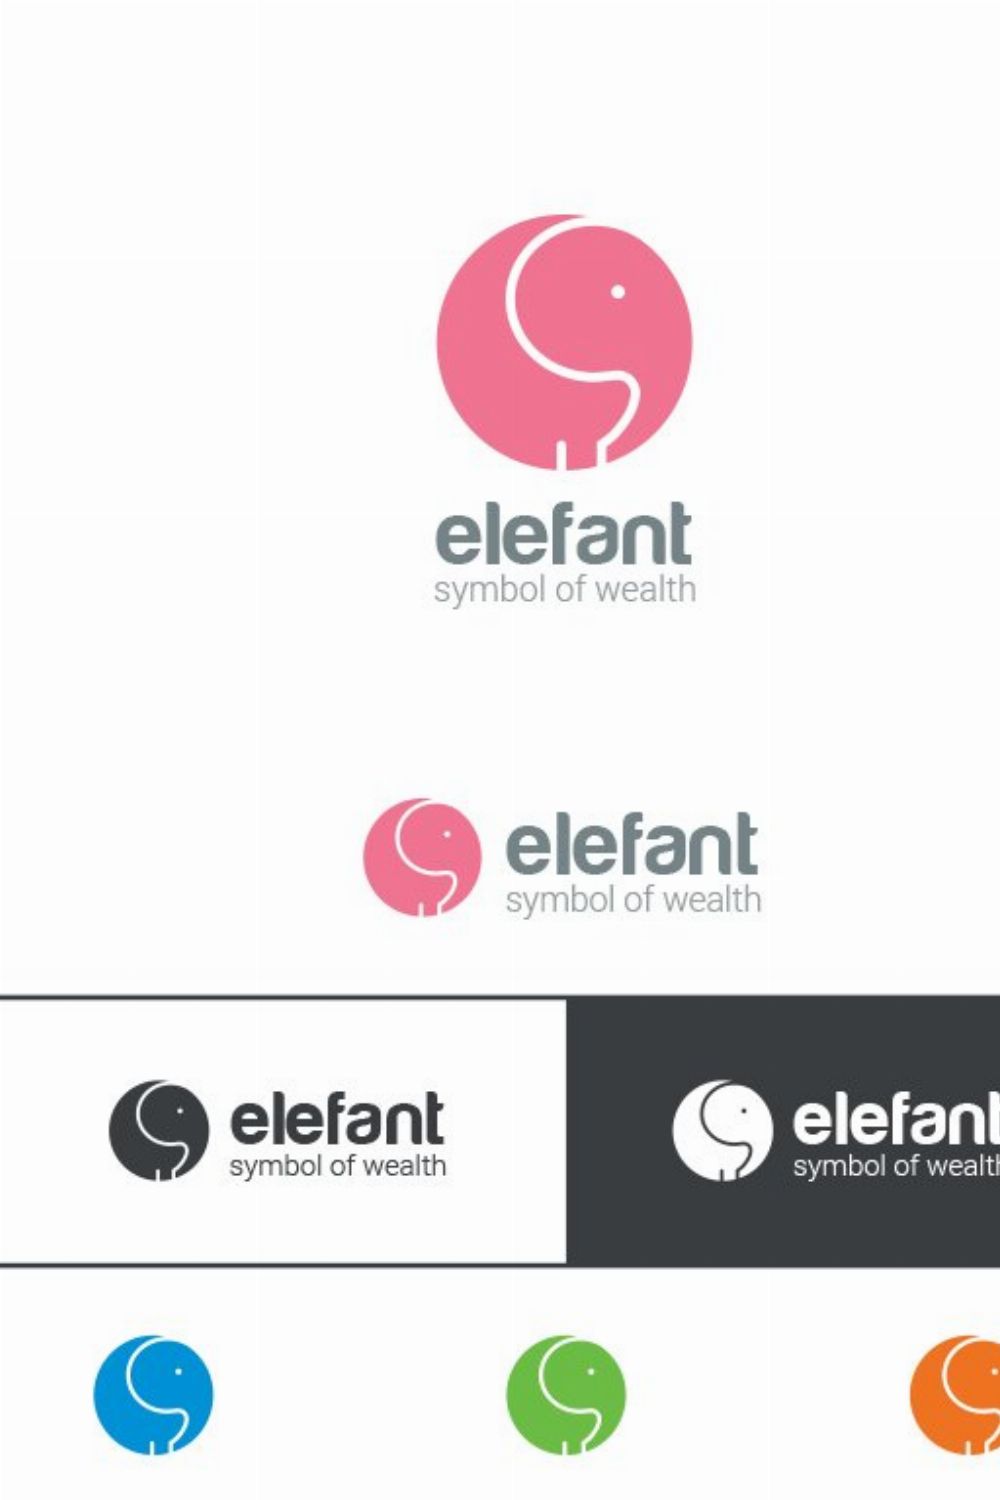 Elephant logo circle design pinterest preview image.